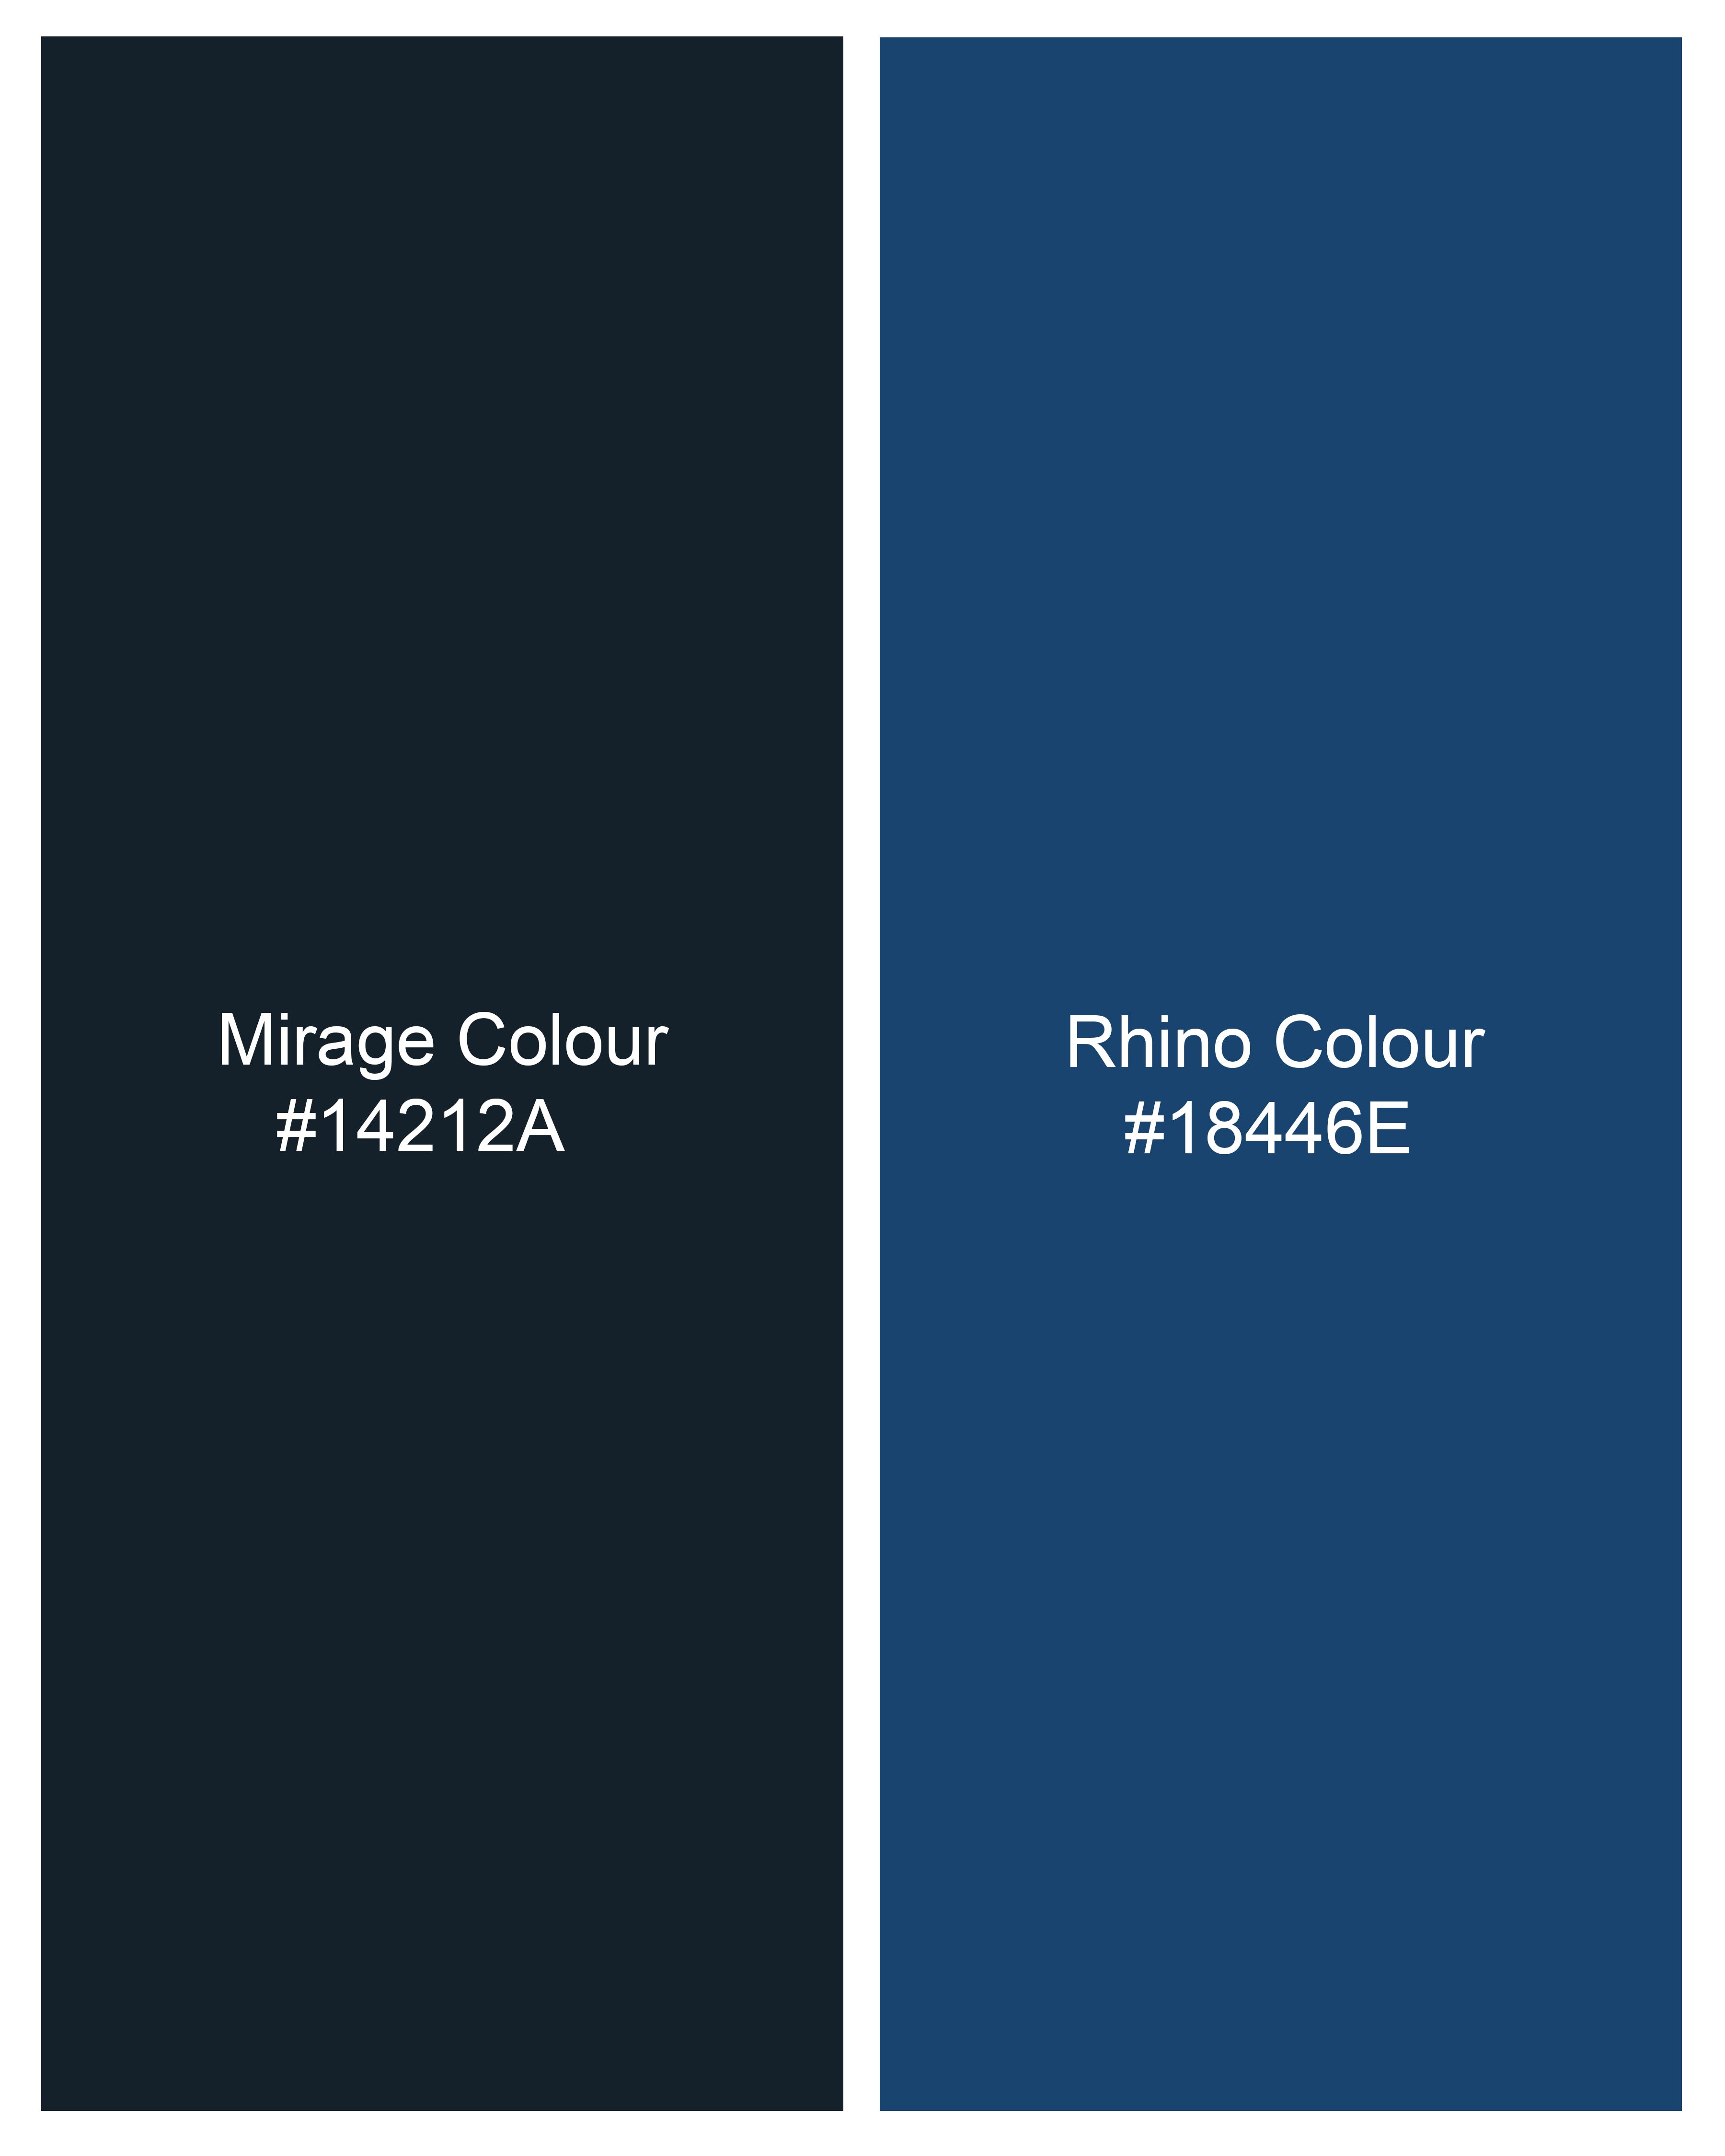 Mirage Dark Blue with Rhino Blue Super Soft Premium Cotton Shirt 9609-38,9609-H-38,9609-39,9609-H-39,9609-40,9609-H-40,9609-42,9609-H-42,9609-44,9609-H-44,9609-46,9609-H-46,9609-48,9609-H-48,9609-50,9609-H-50,9609-52,9609-H-52